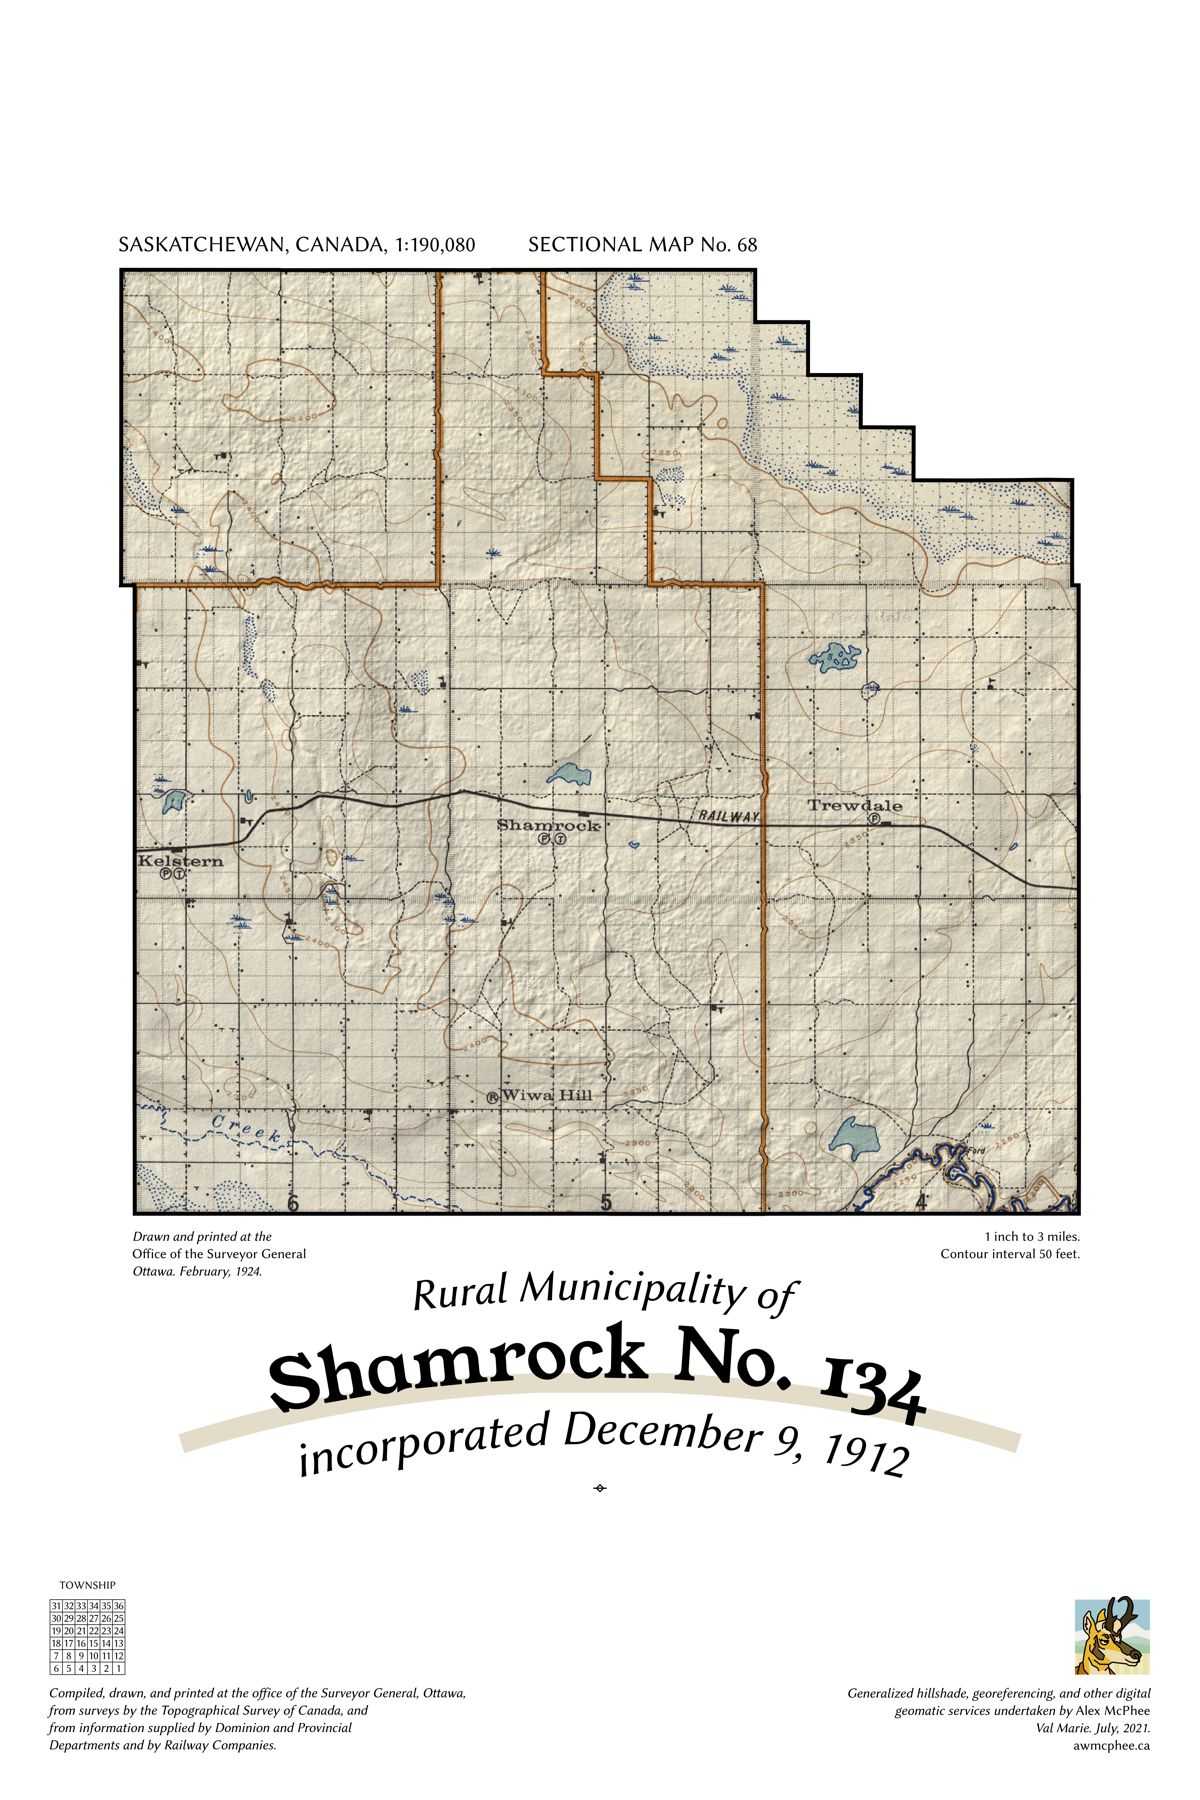 A map of the Rural Municipality of Shamrock No. 134.